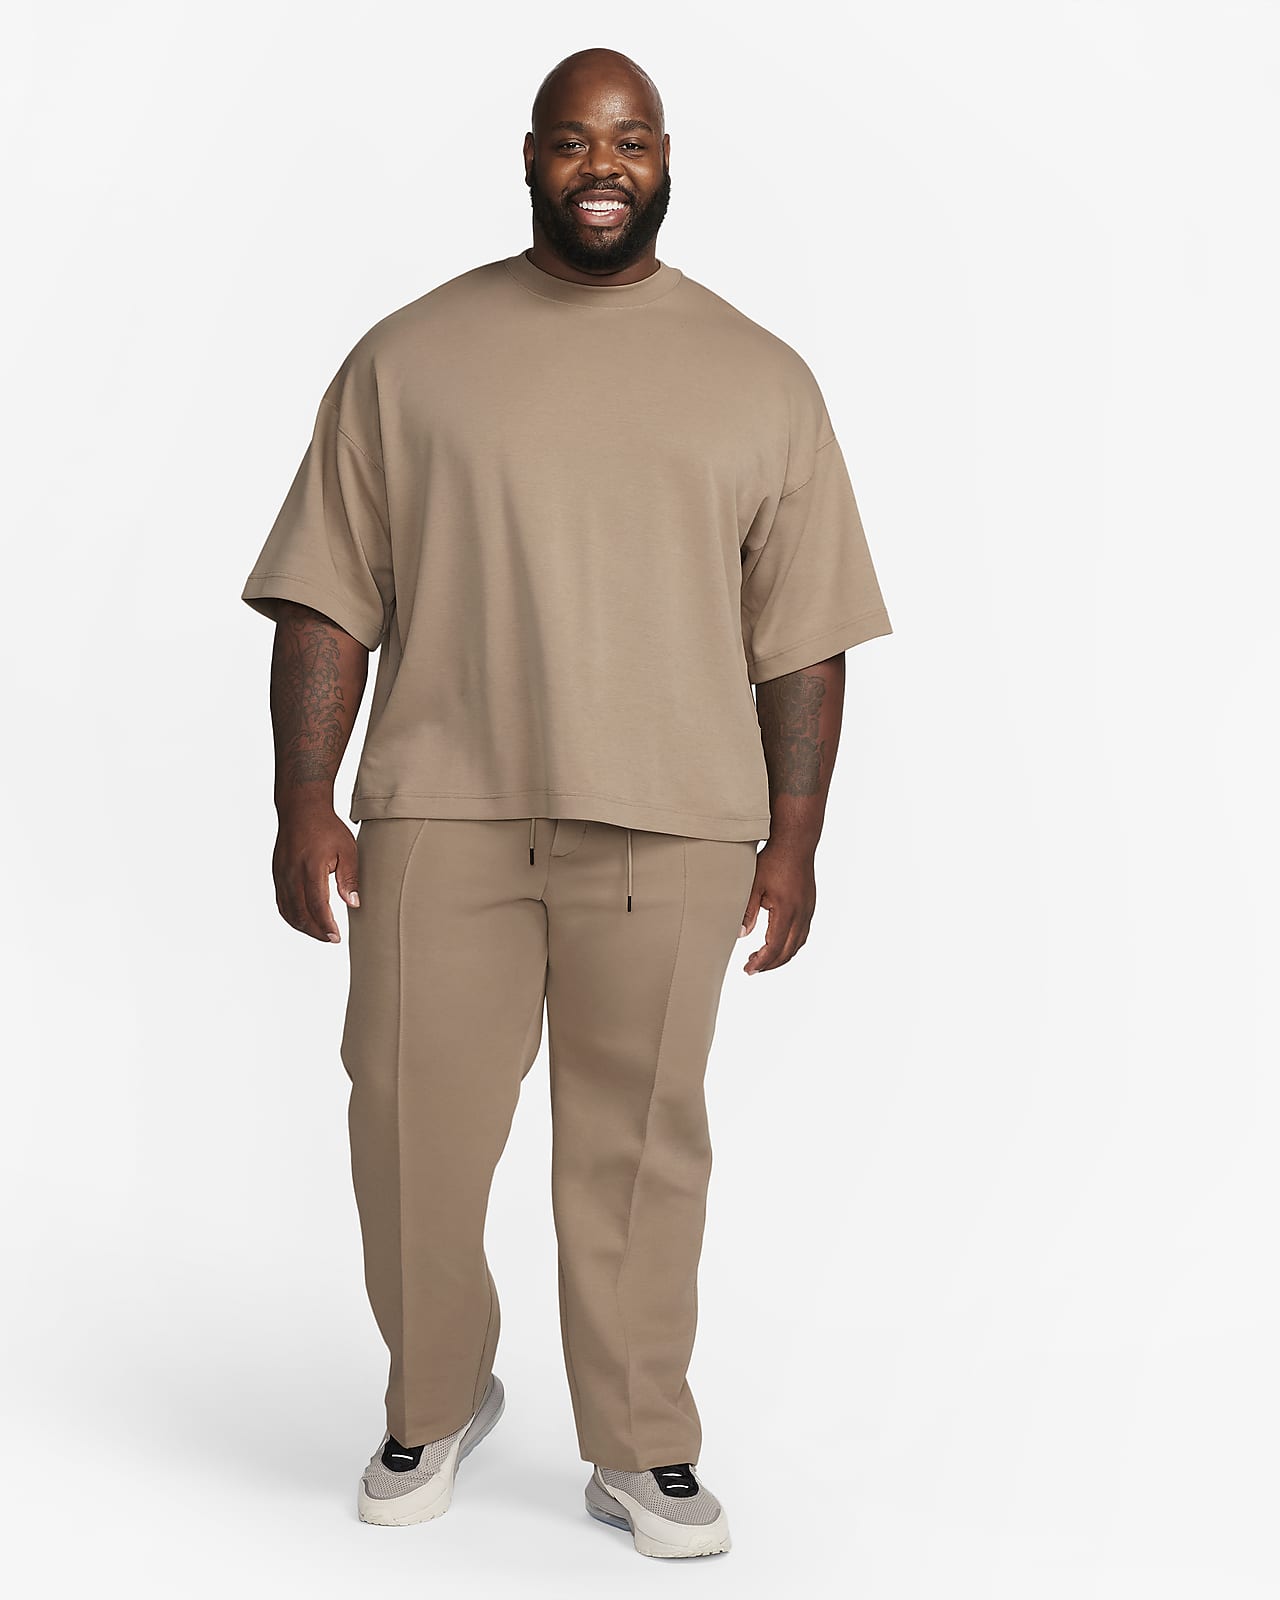 Nike Athletic Sweatpants Men’s XL Loose Fit Athletic Pants Pockets Baggy  Blue